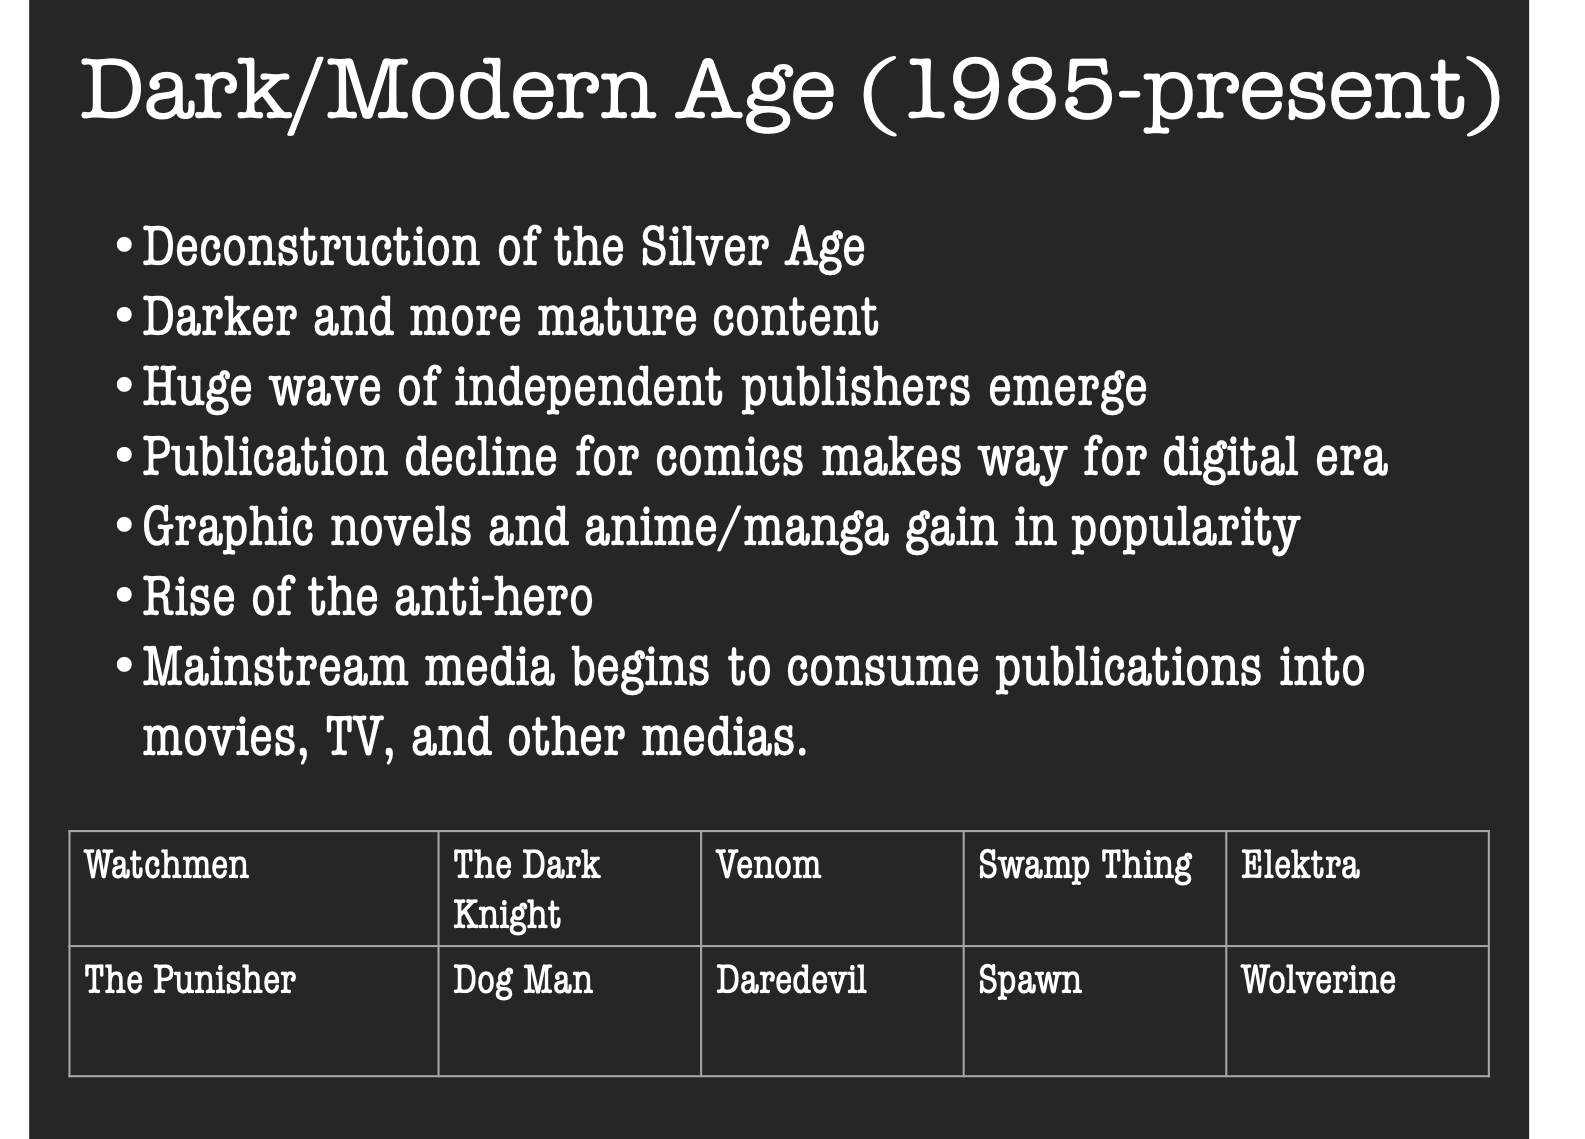 Comic books in the dark/modern age (1985-present)